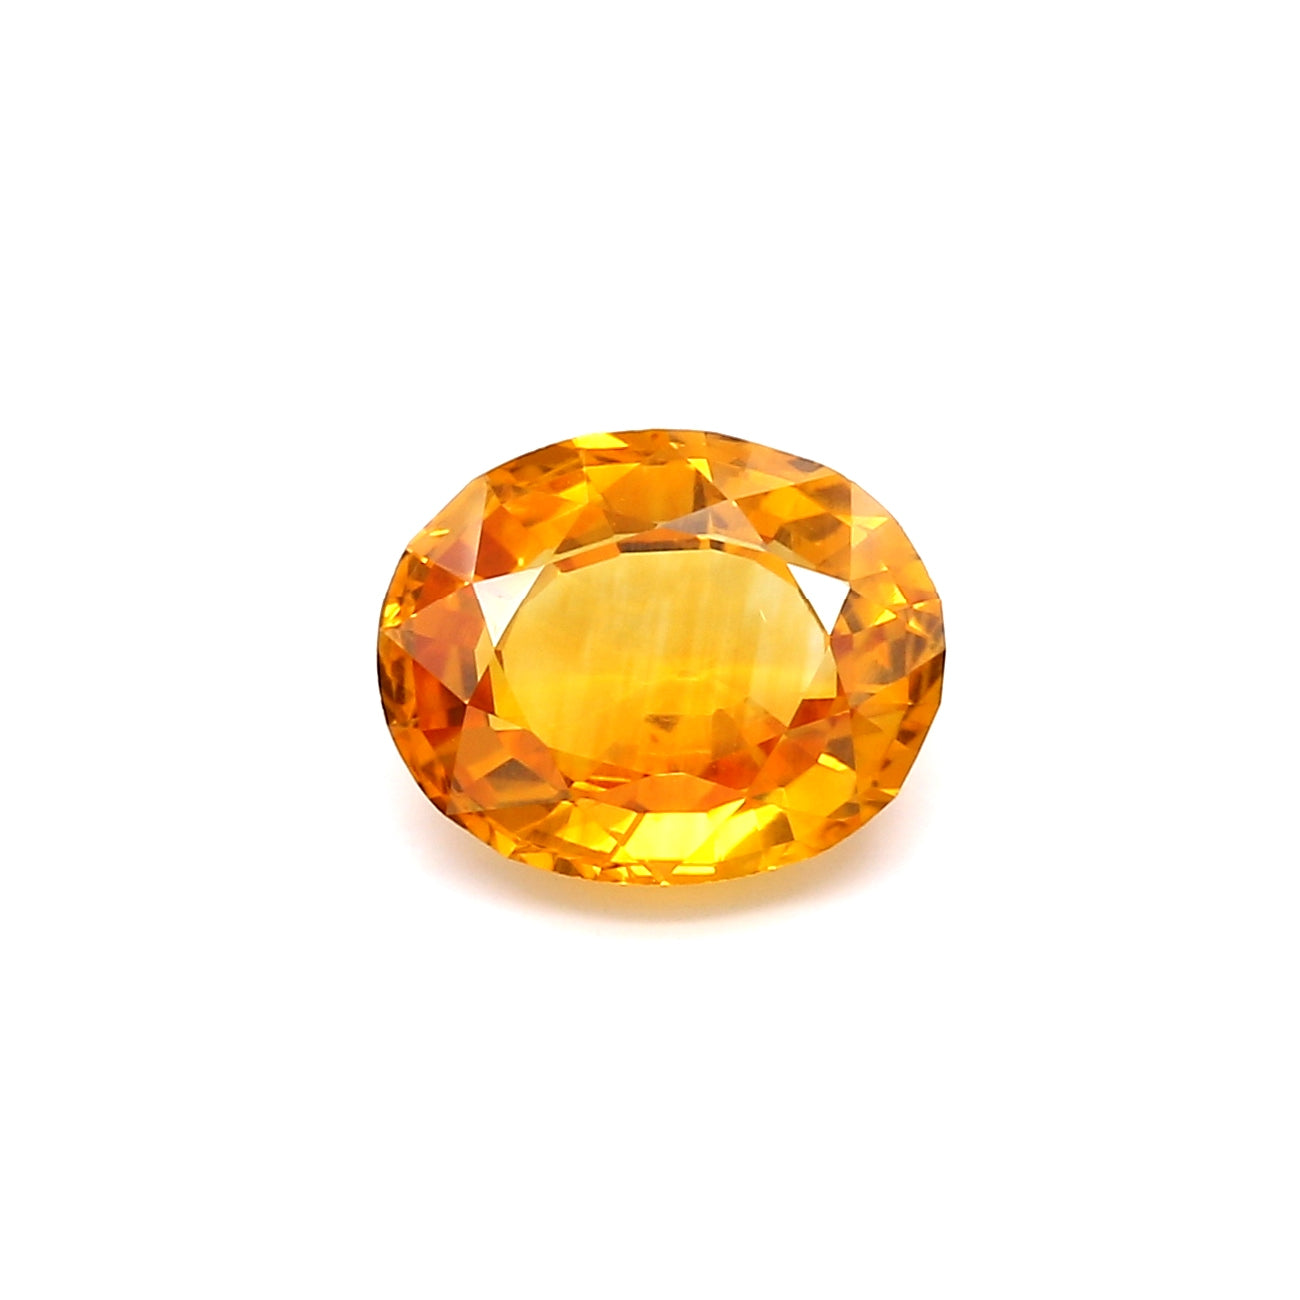 2.92ct Orangy Yellow, Oval Sapphire, Heated, Sri Lanka - 9.89 x 8.09 x 4.28mm